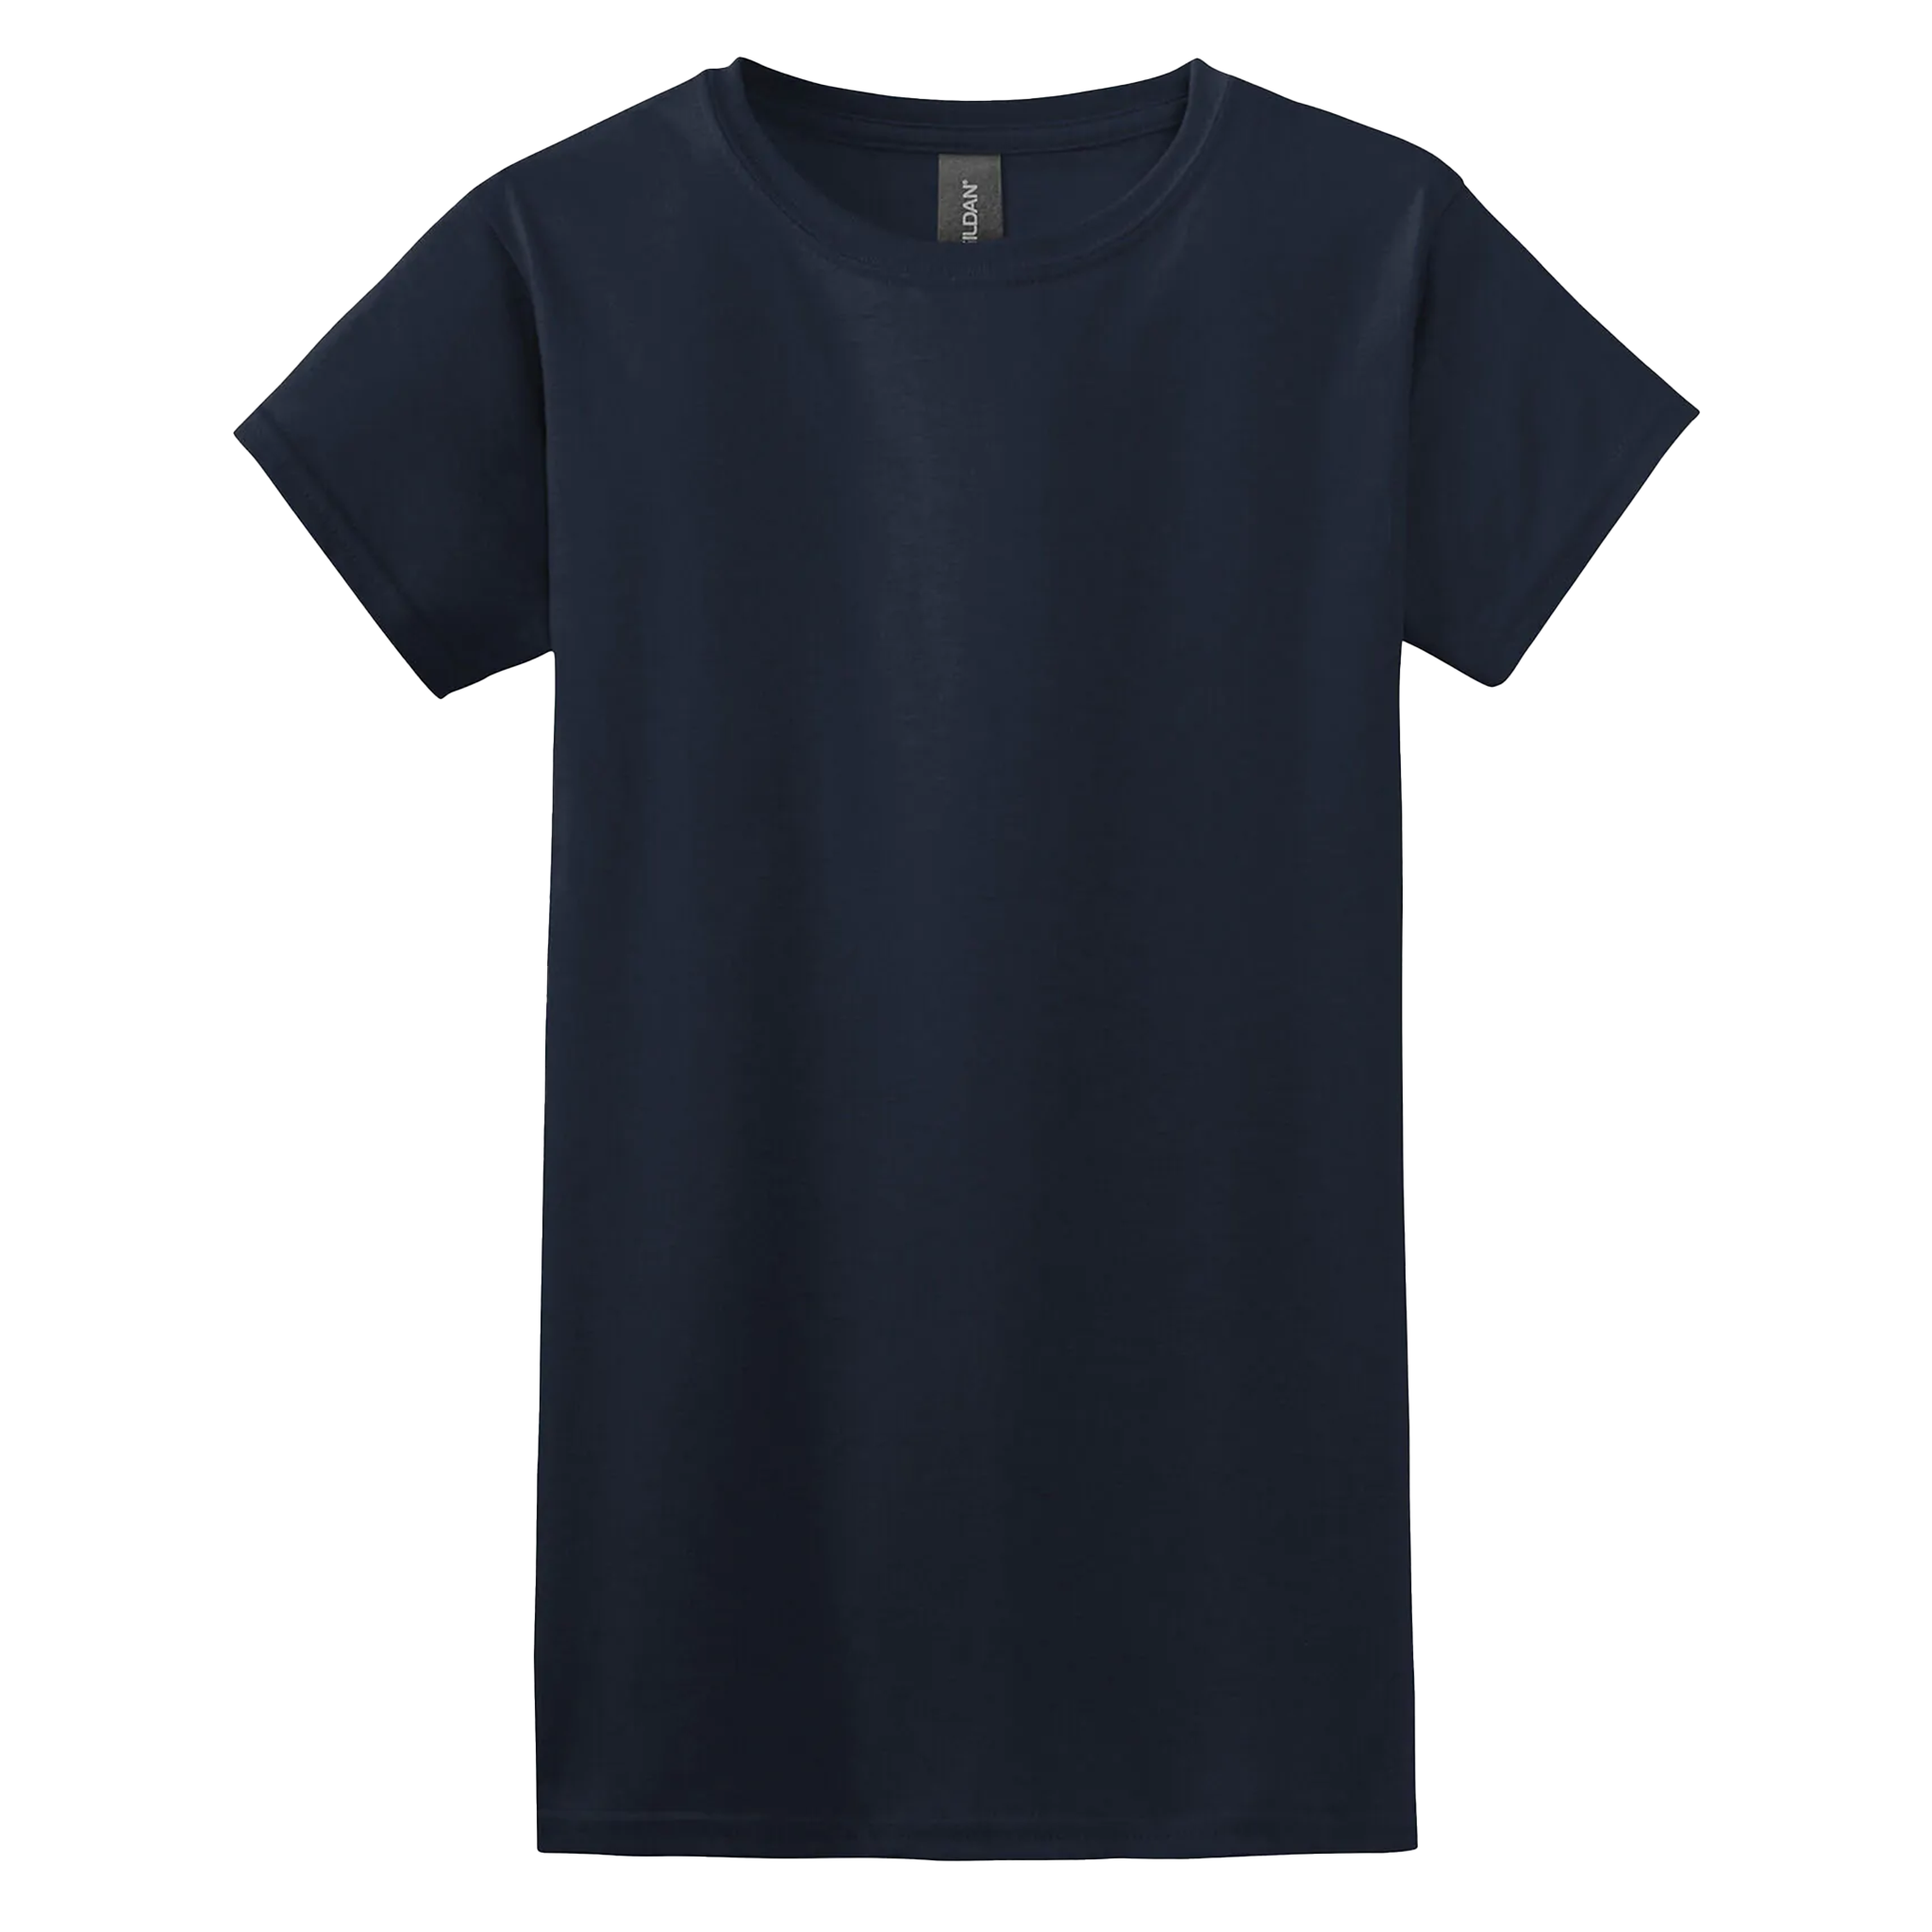 Gildan Softstyle T-Shirt - Women's Sizing S-3XL - Navy